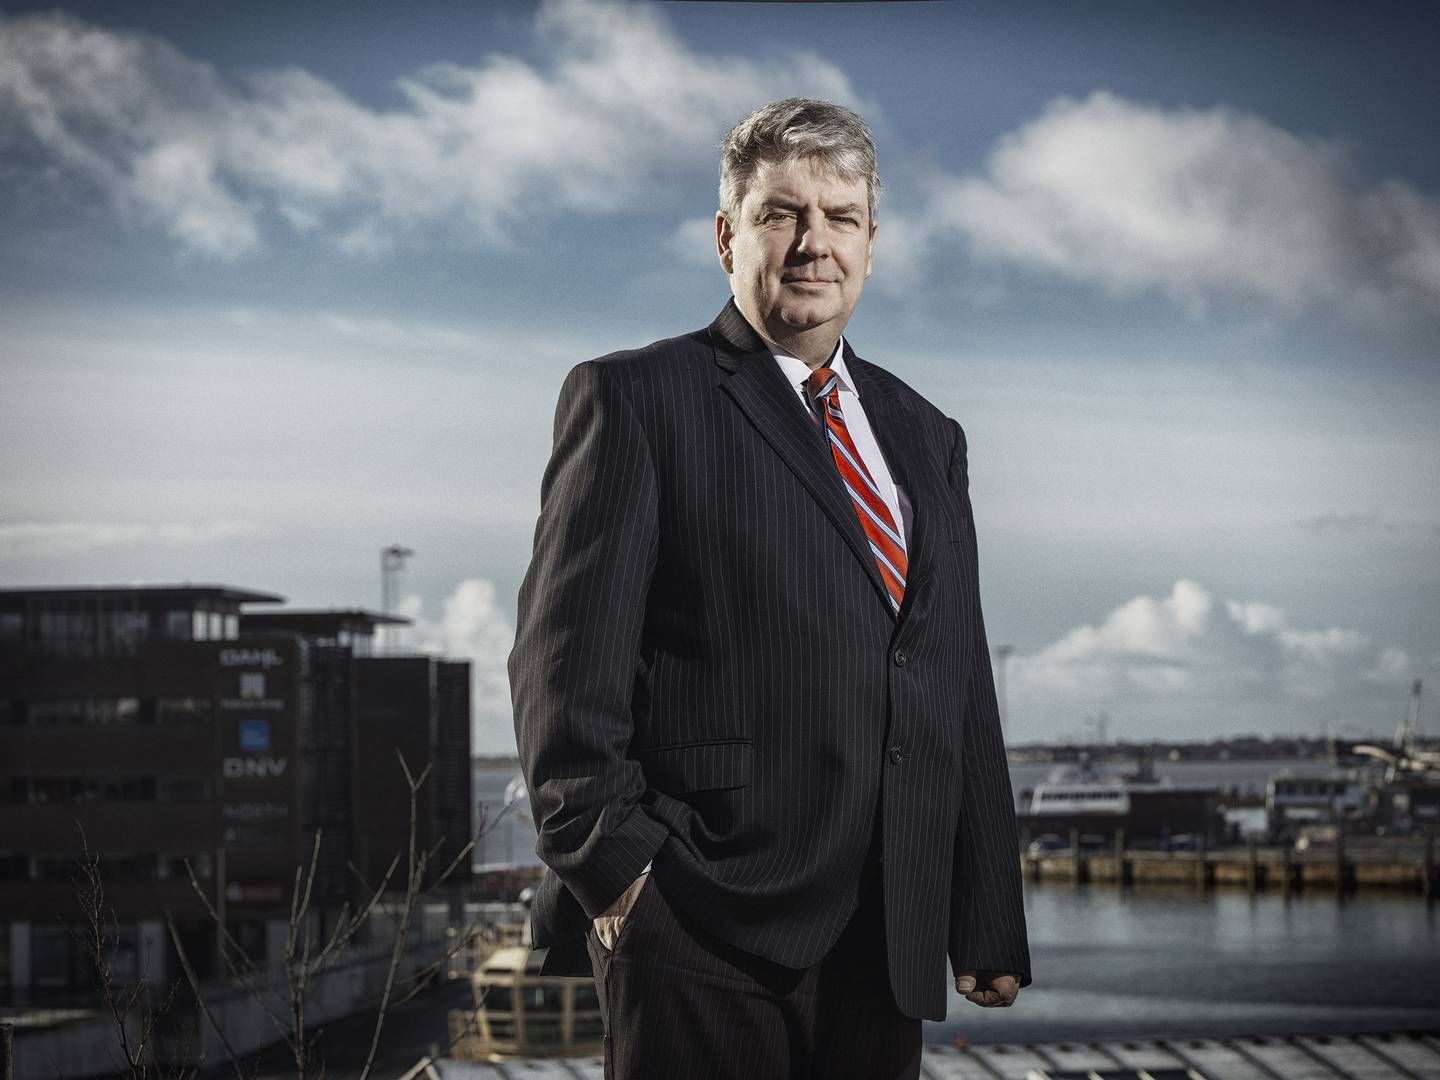 Adm. direktør fors Esbjerg Havn Dennis Jul Pedersen.